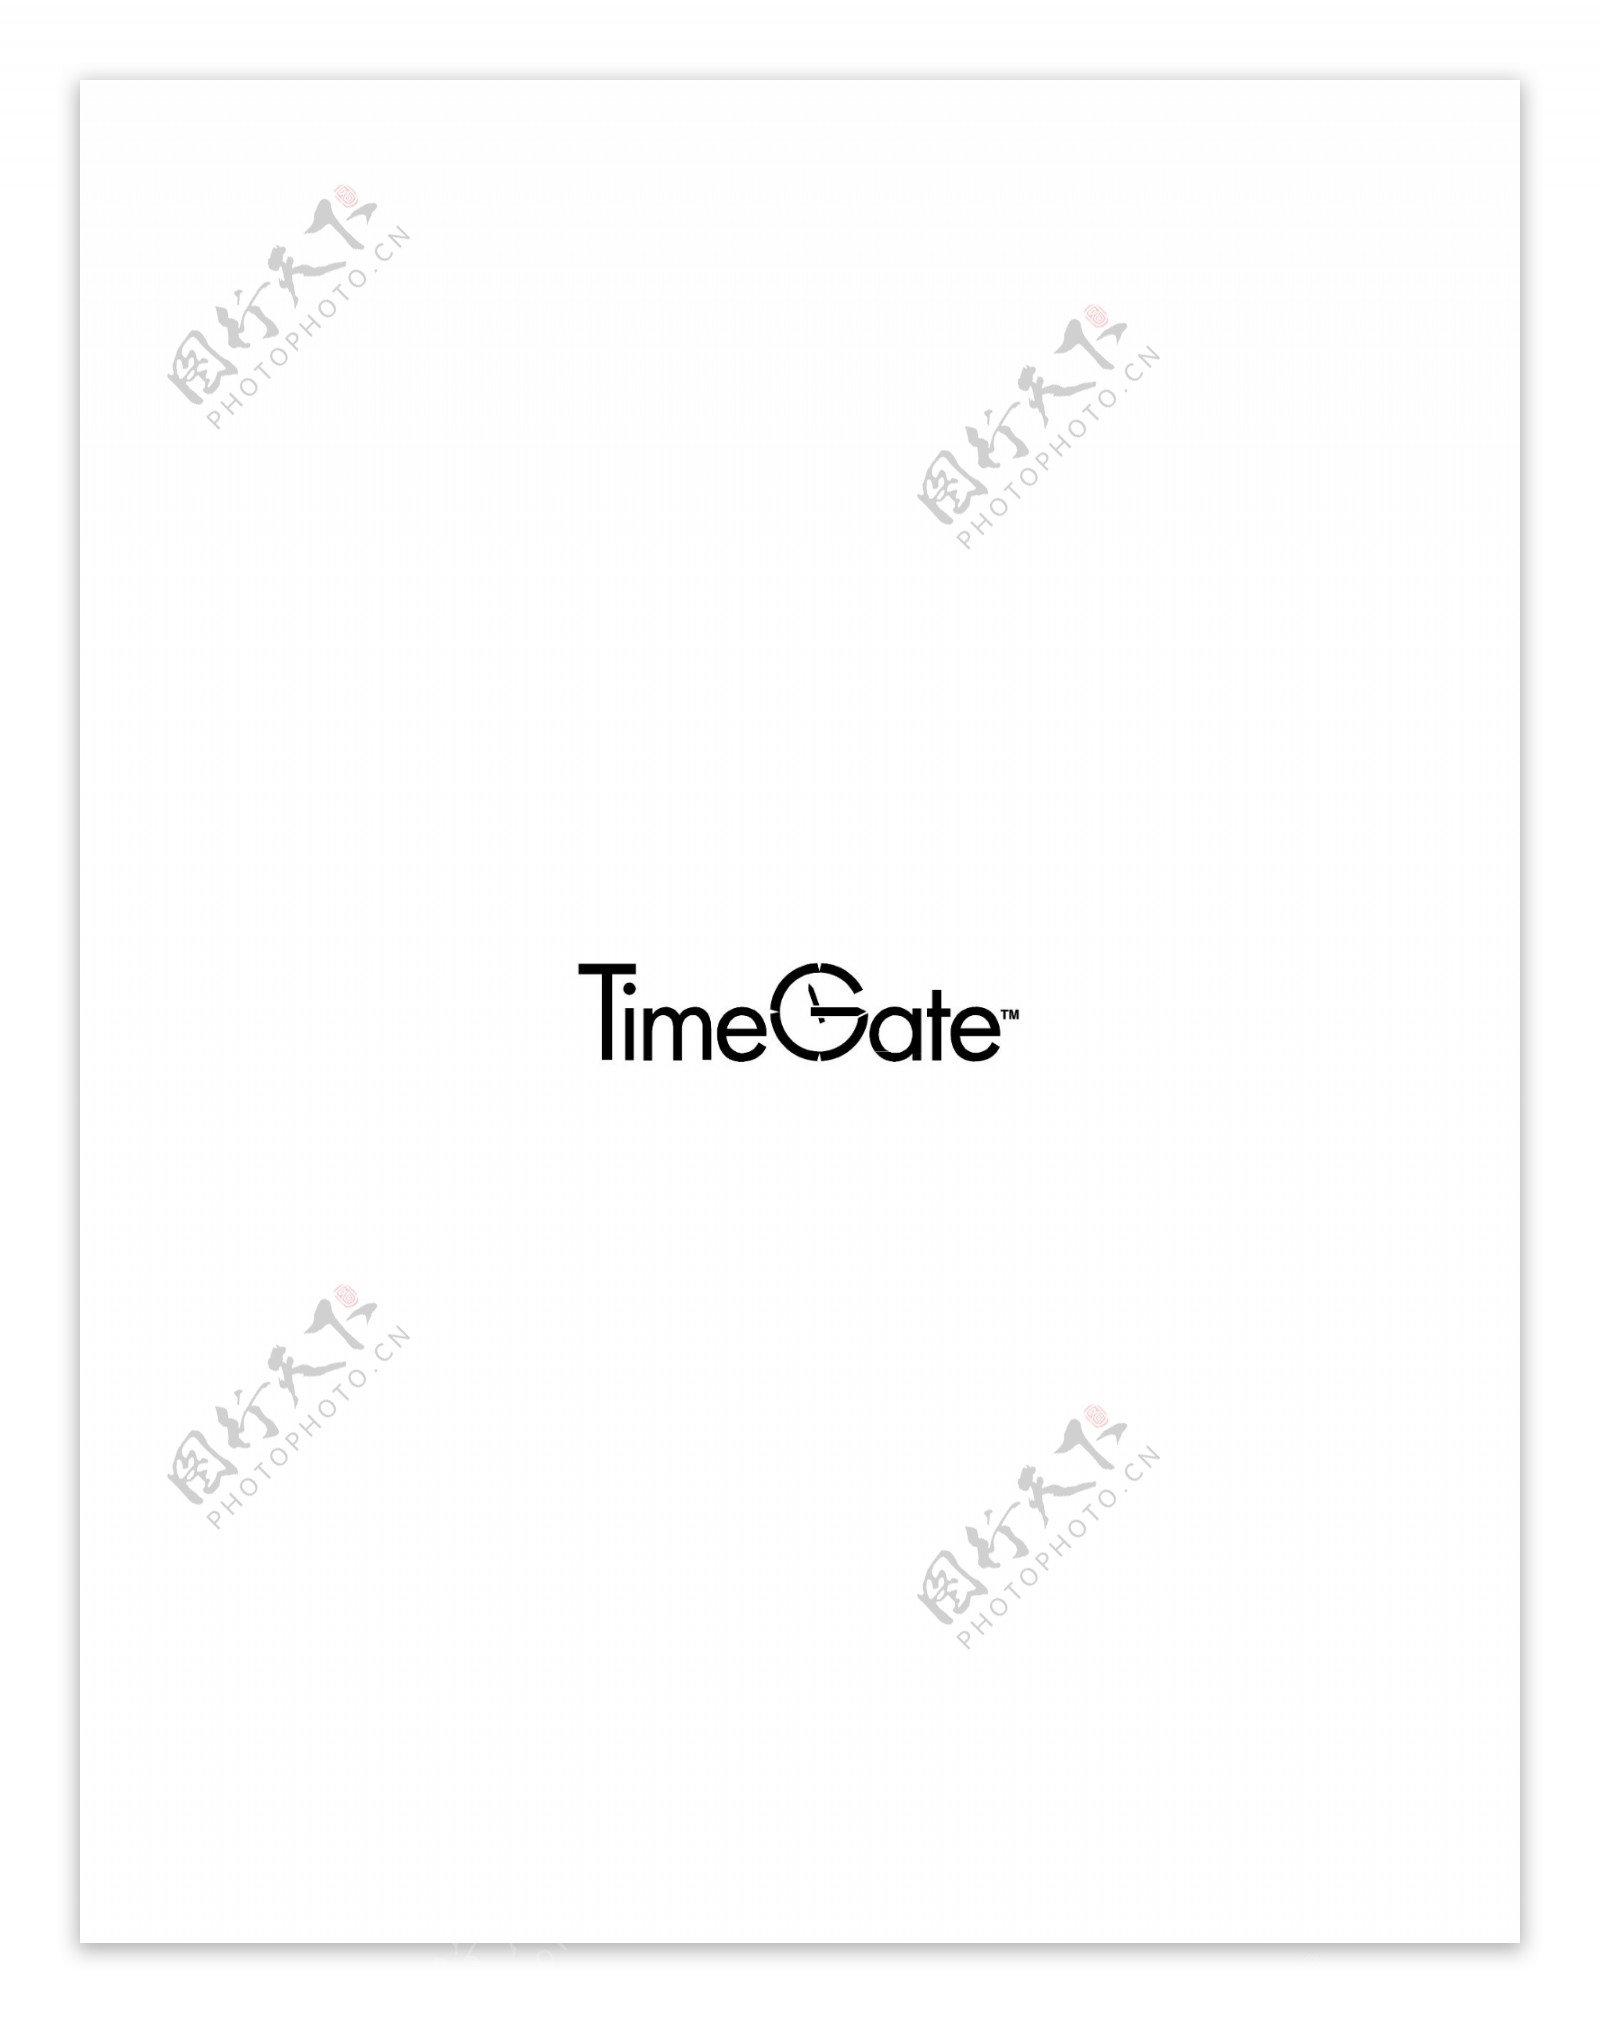 TimeGatelogo设计欣赏足球队队徽LOGO设计TimeGate下载标志设计欣赏